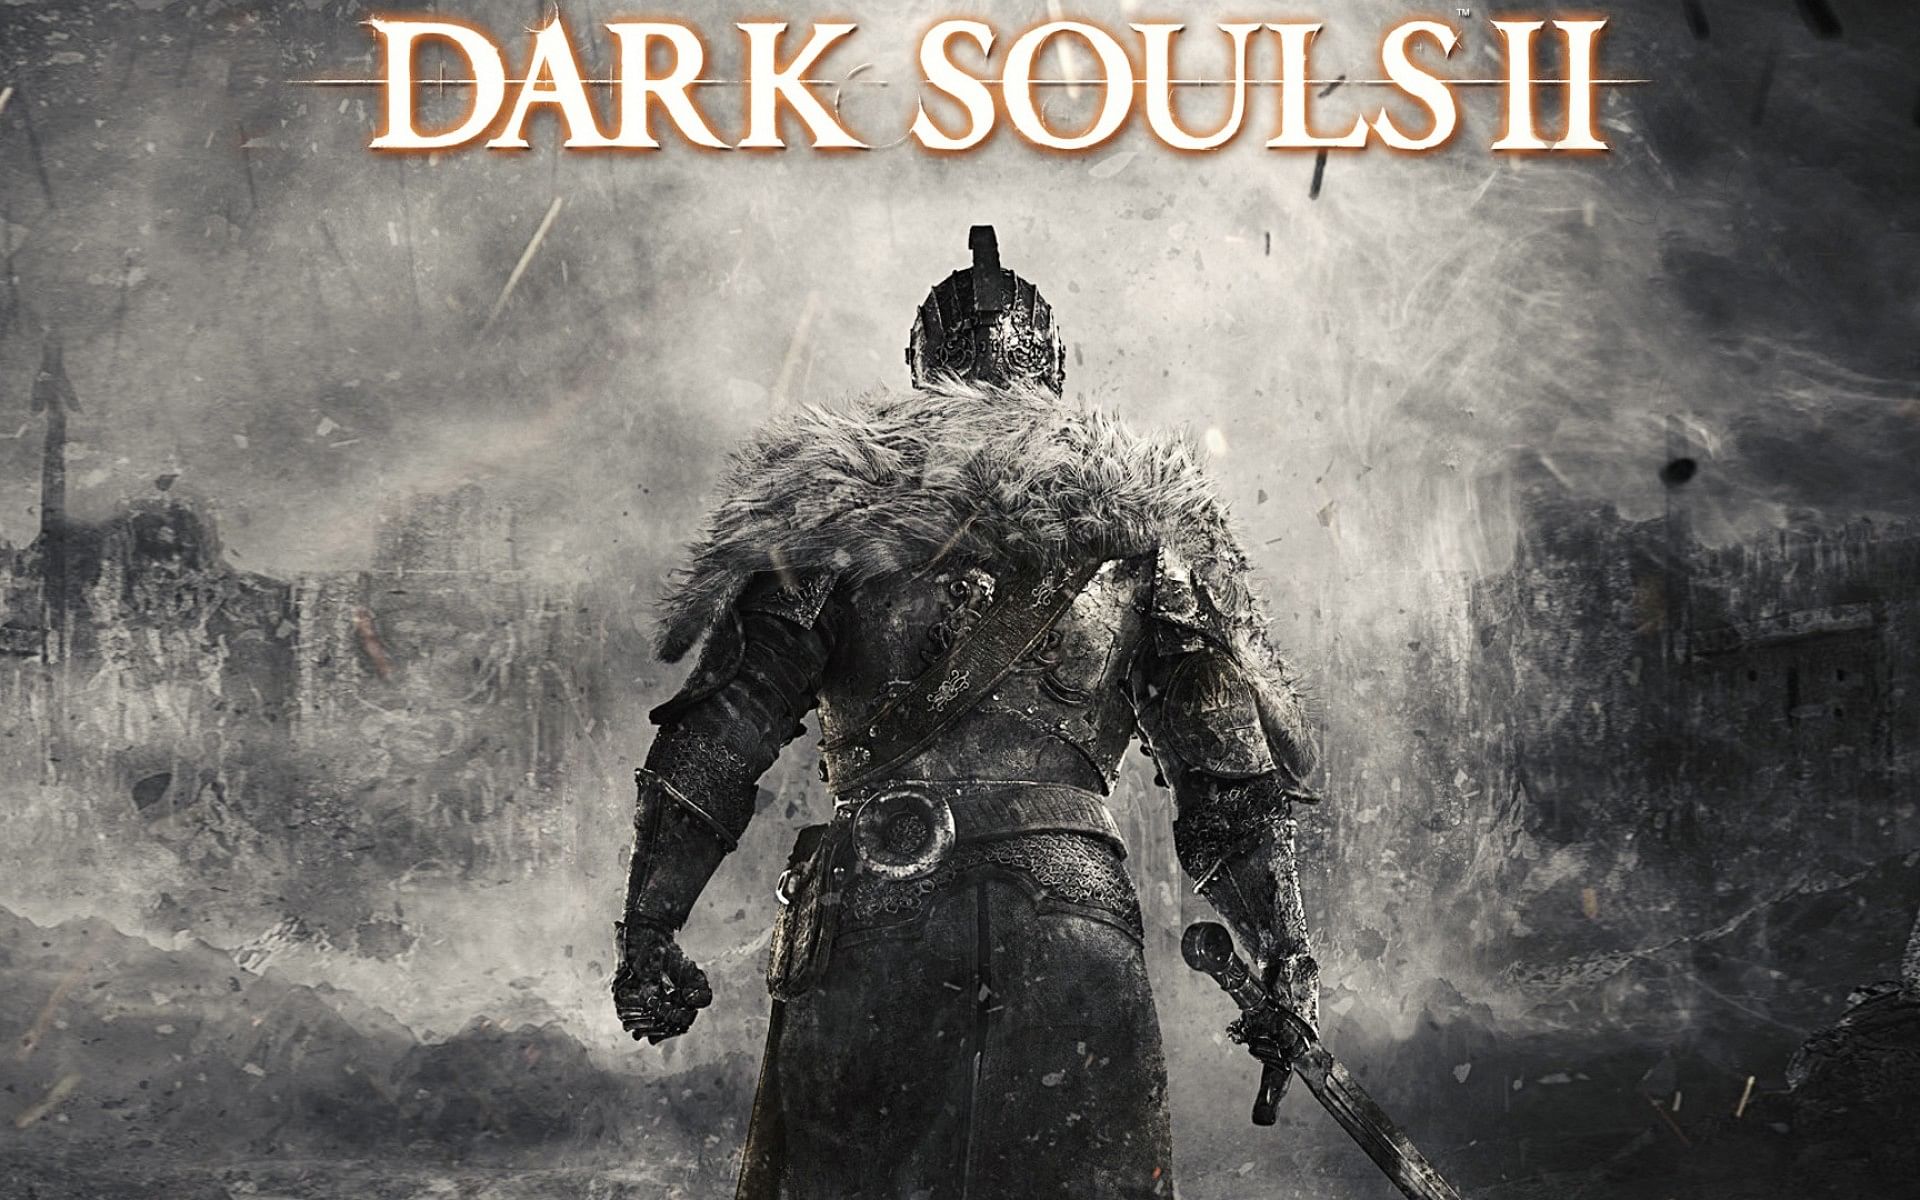 Dark Souls II: Scholar of the First Sin - PlayStation 3